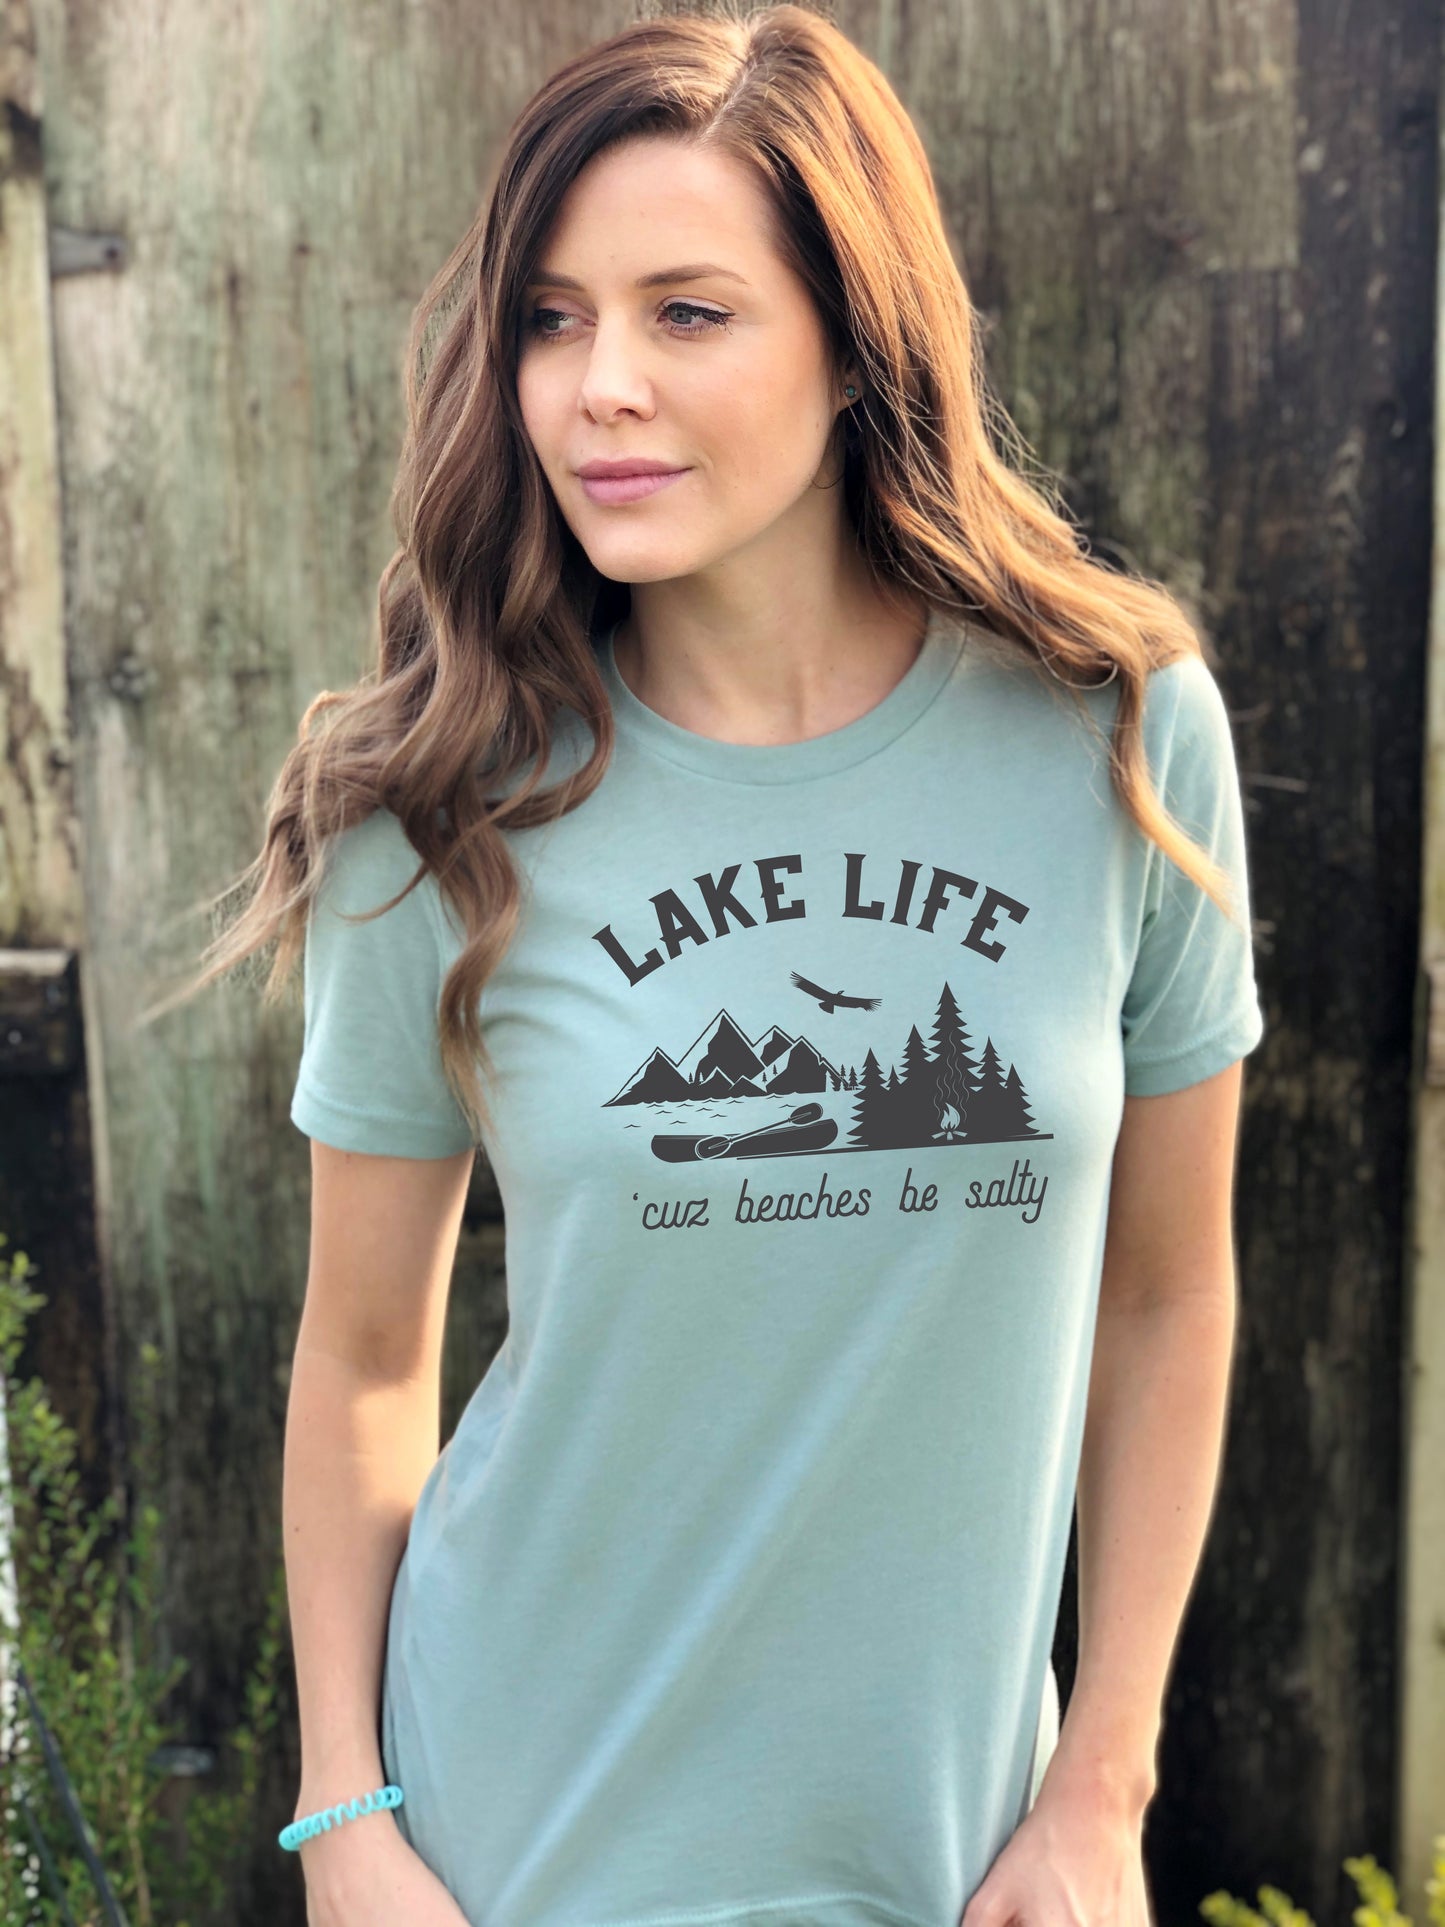 Lake Life Shirt | Lake Life 'cuz beaches be salty super soft tee shirt |